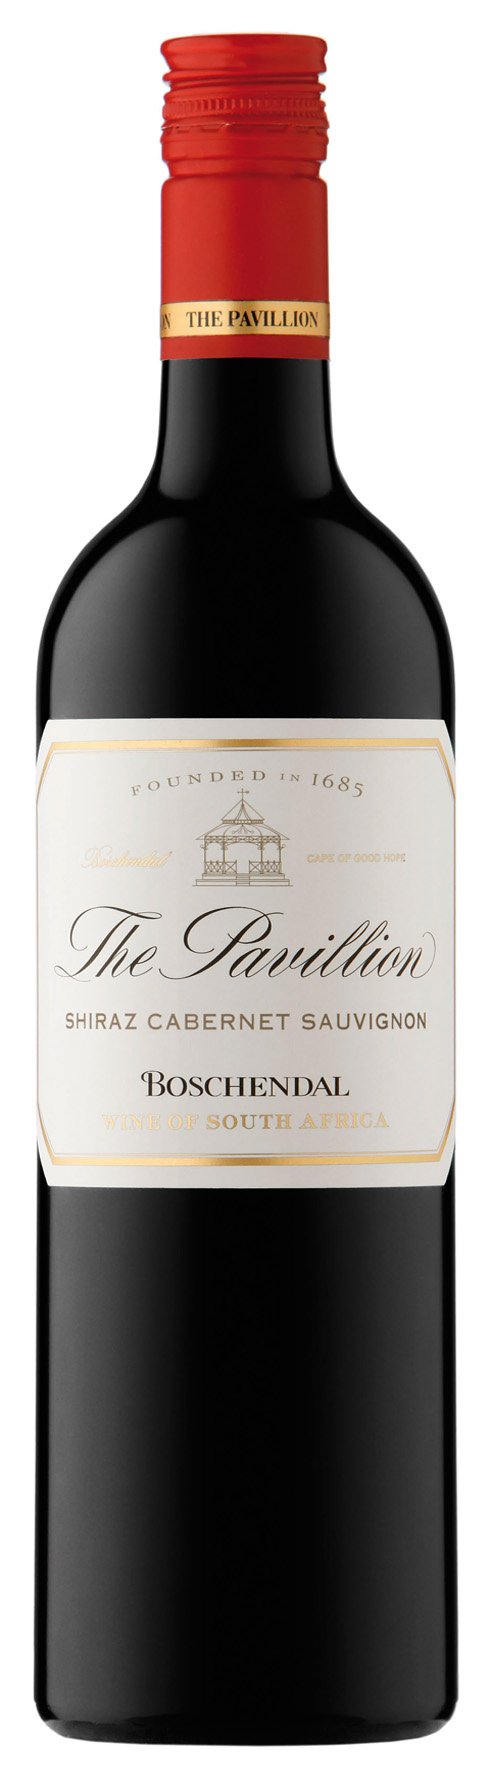 The Pavillion Shiraz Cabernet Sauvignon (2019) Boschendal